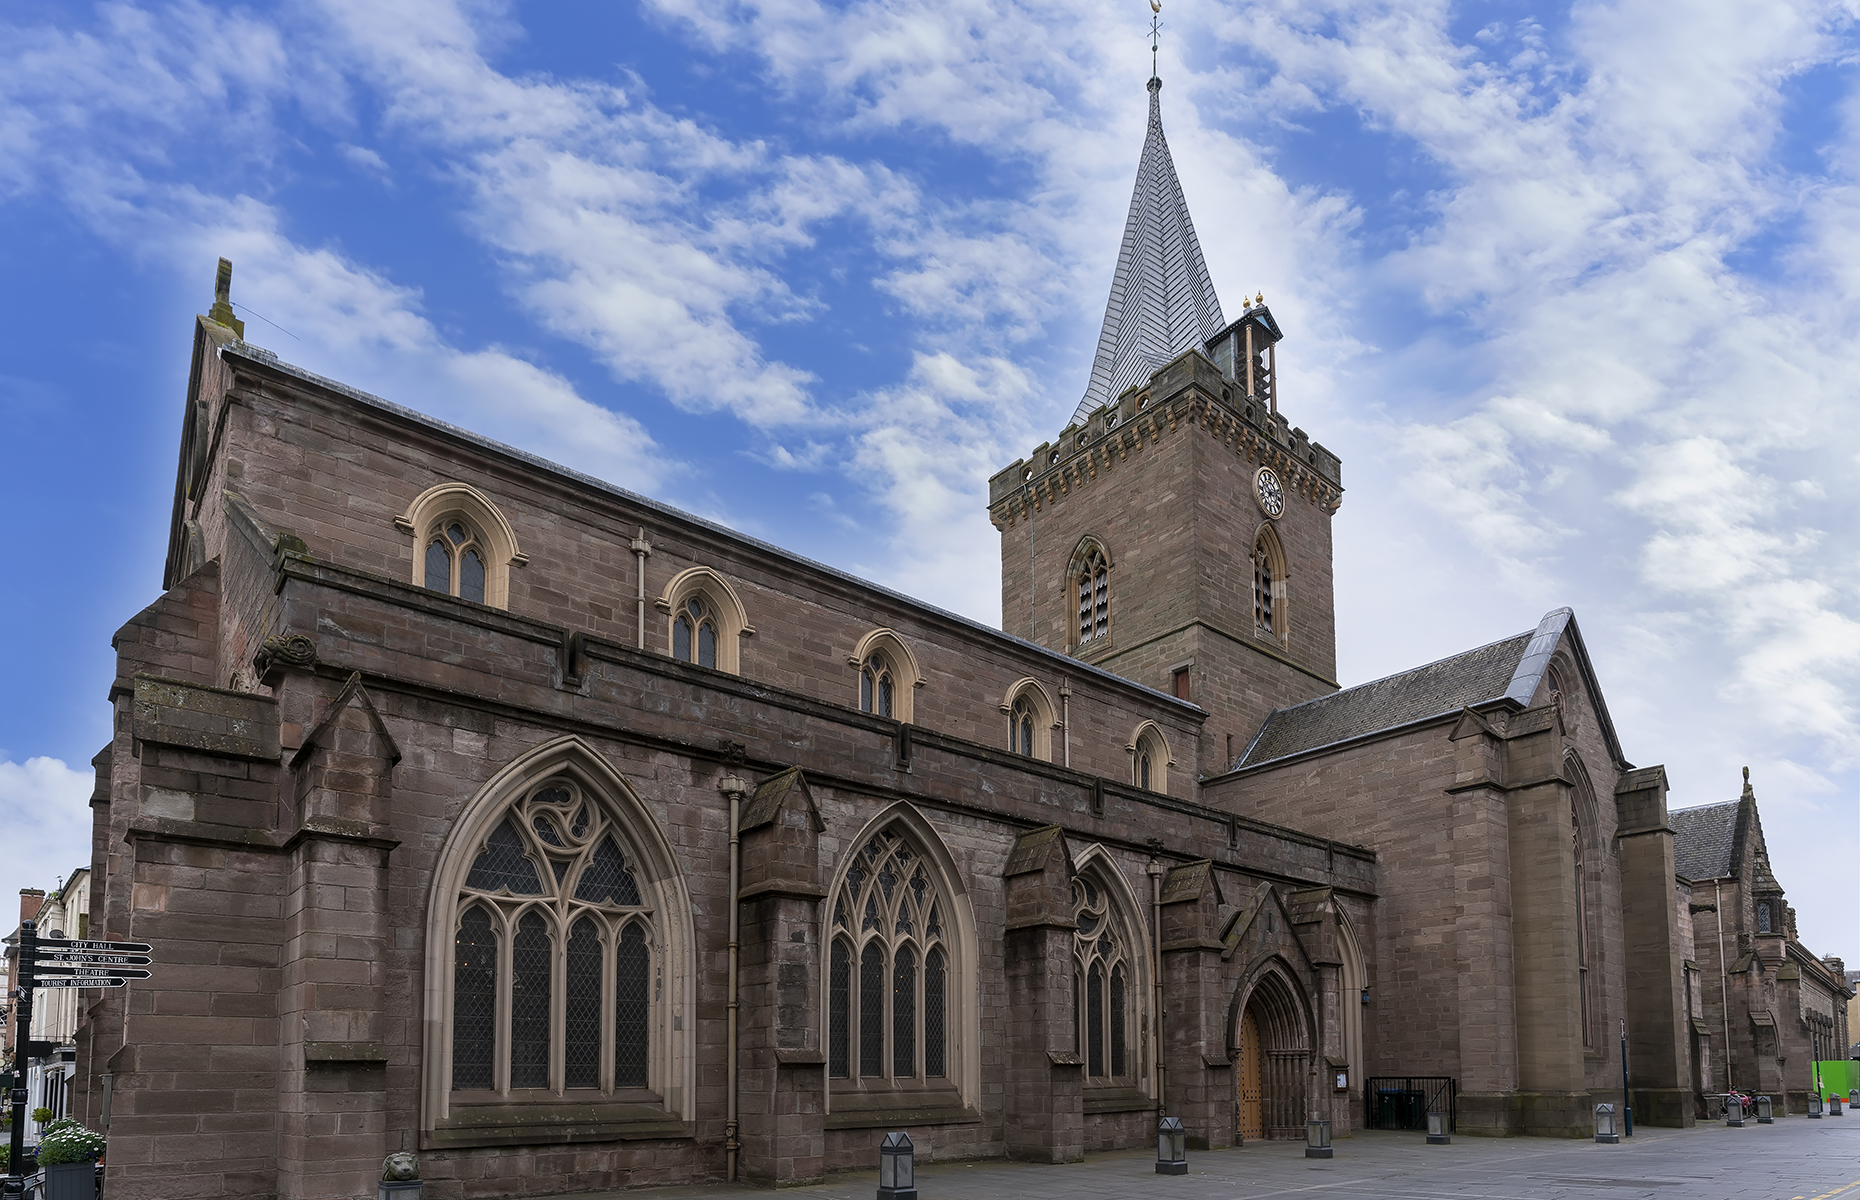 St John's Kirk, Perth, Scotland. (Image: PK289/Shutterstock)